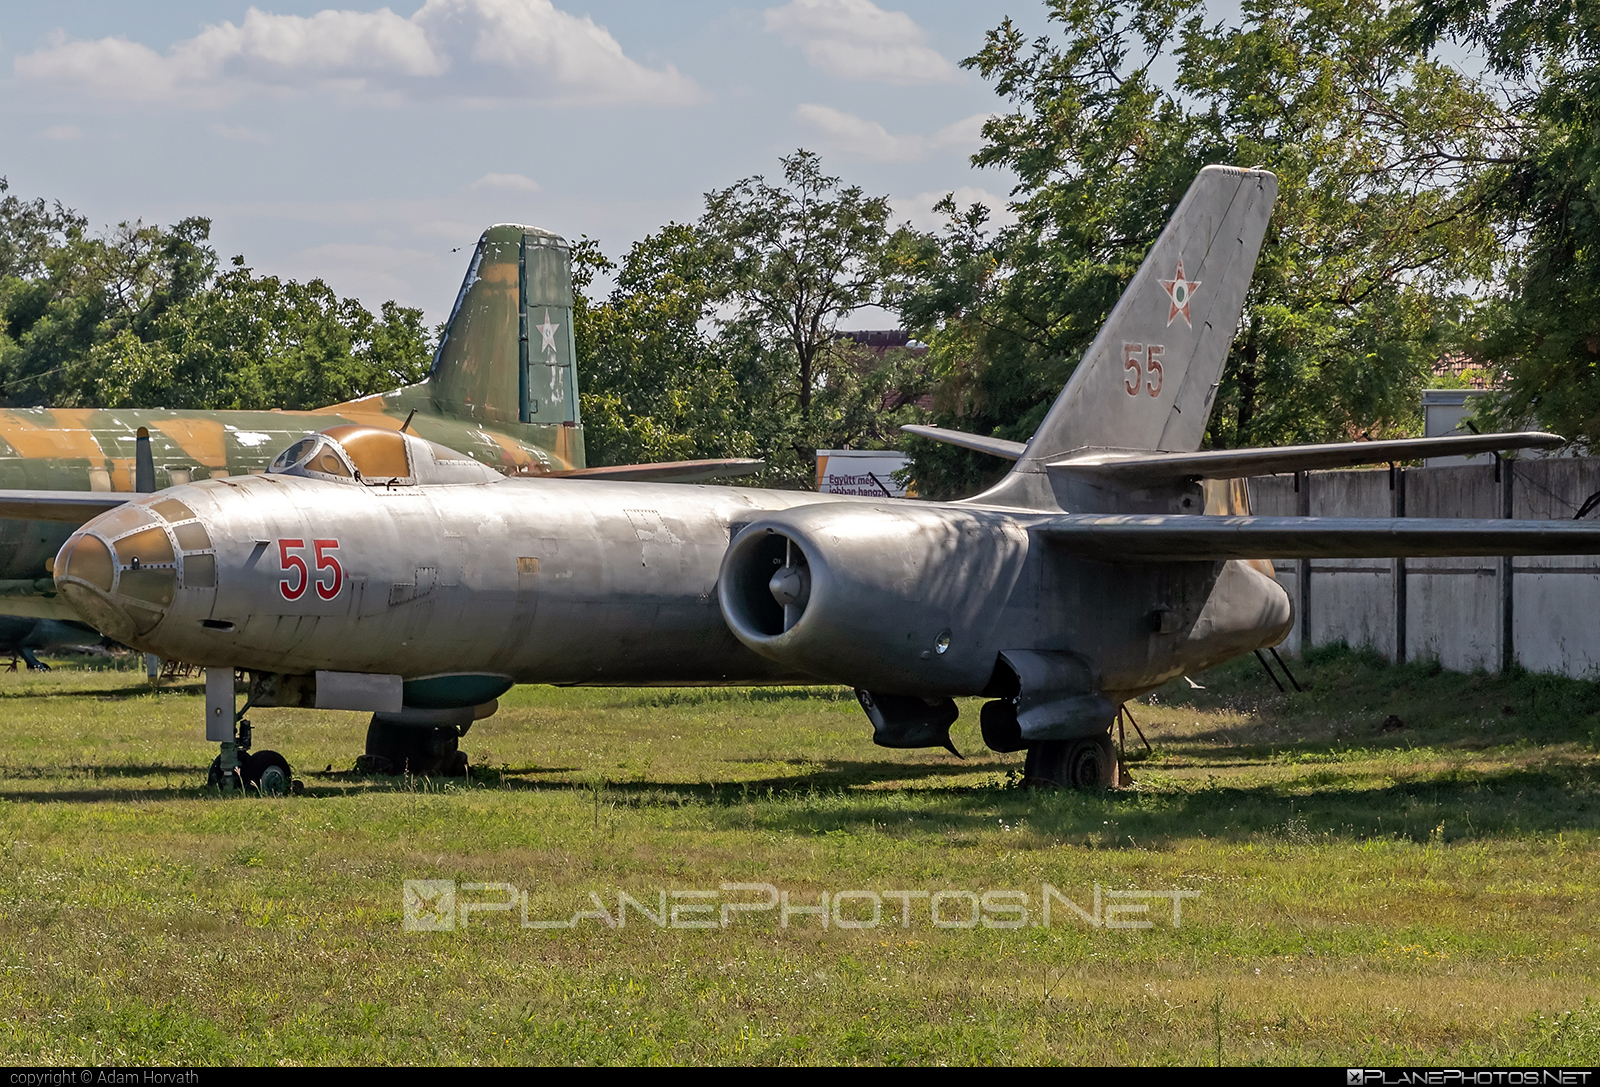 Ilyushin Il-28 - 55 operated by Magyar Légierő (Hungarian Air Force) #hungarianairforce #il28 #ilyushin #magyarlegiero